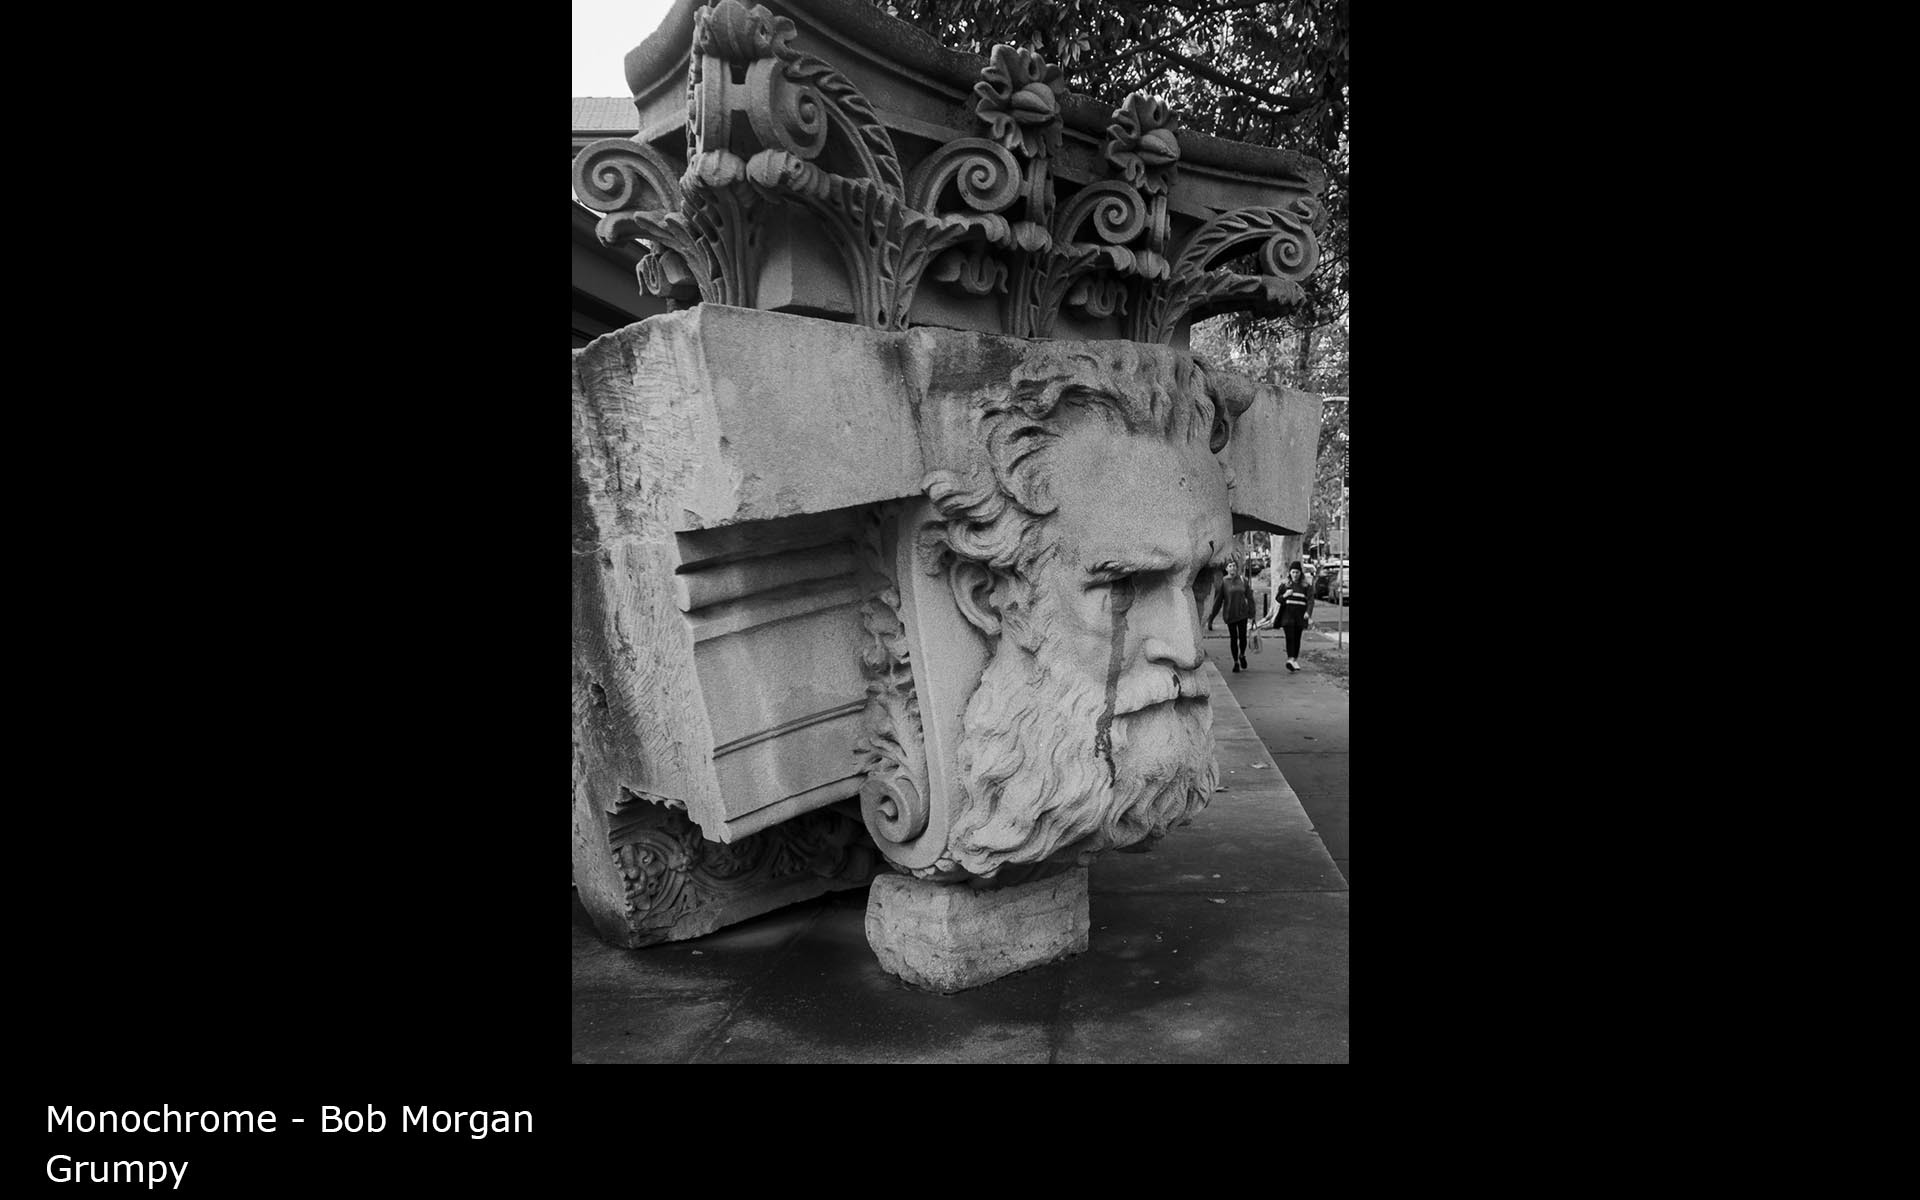 Grumpy - Bob Morgan